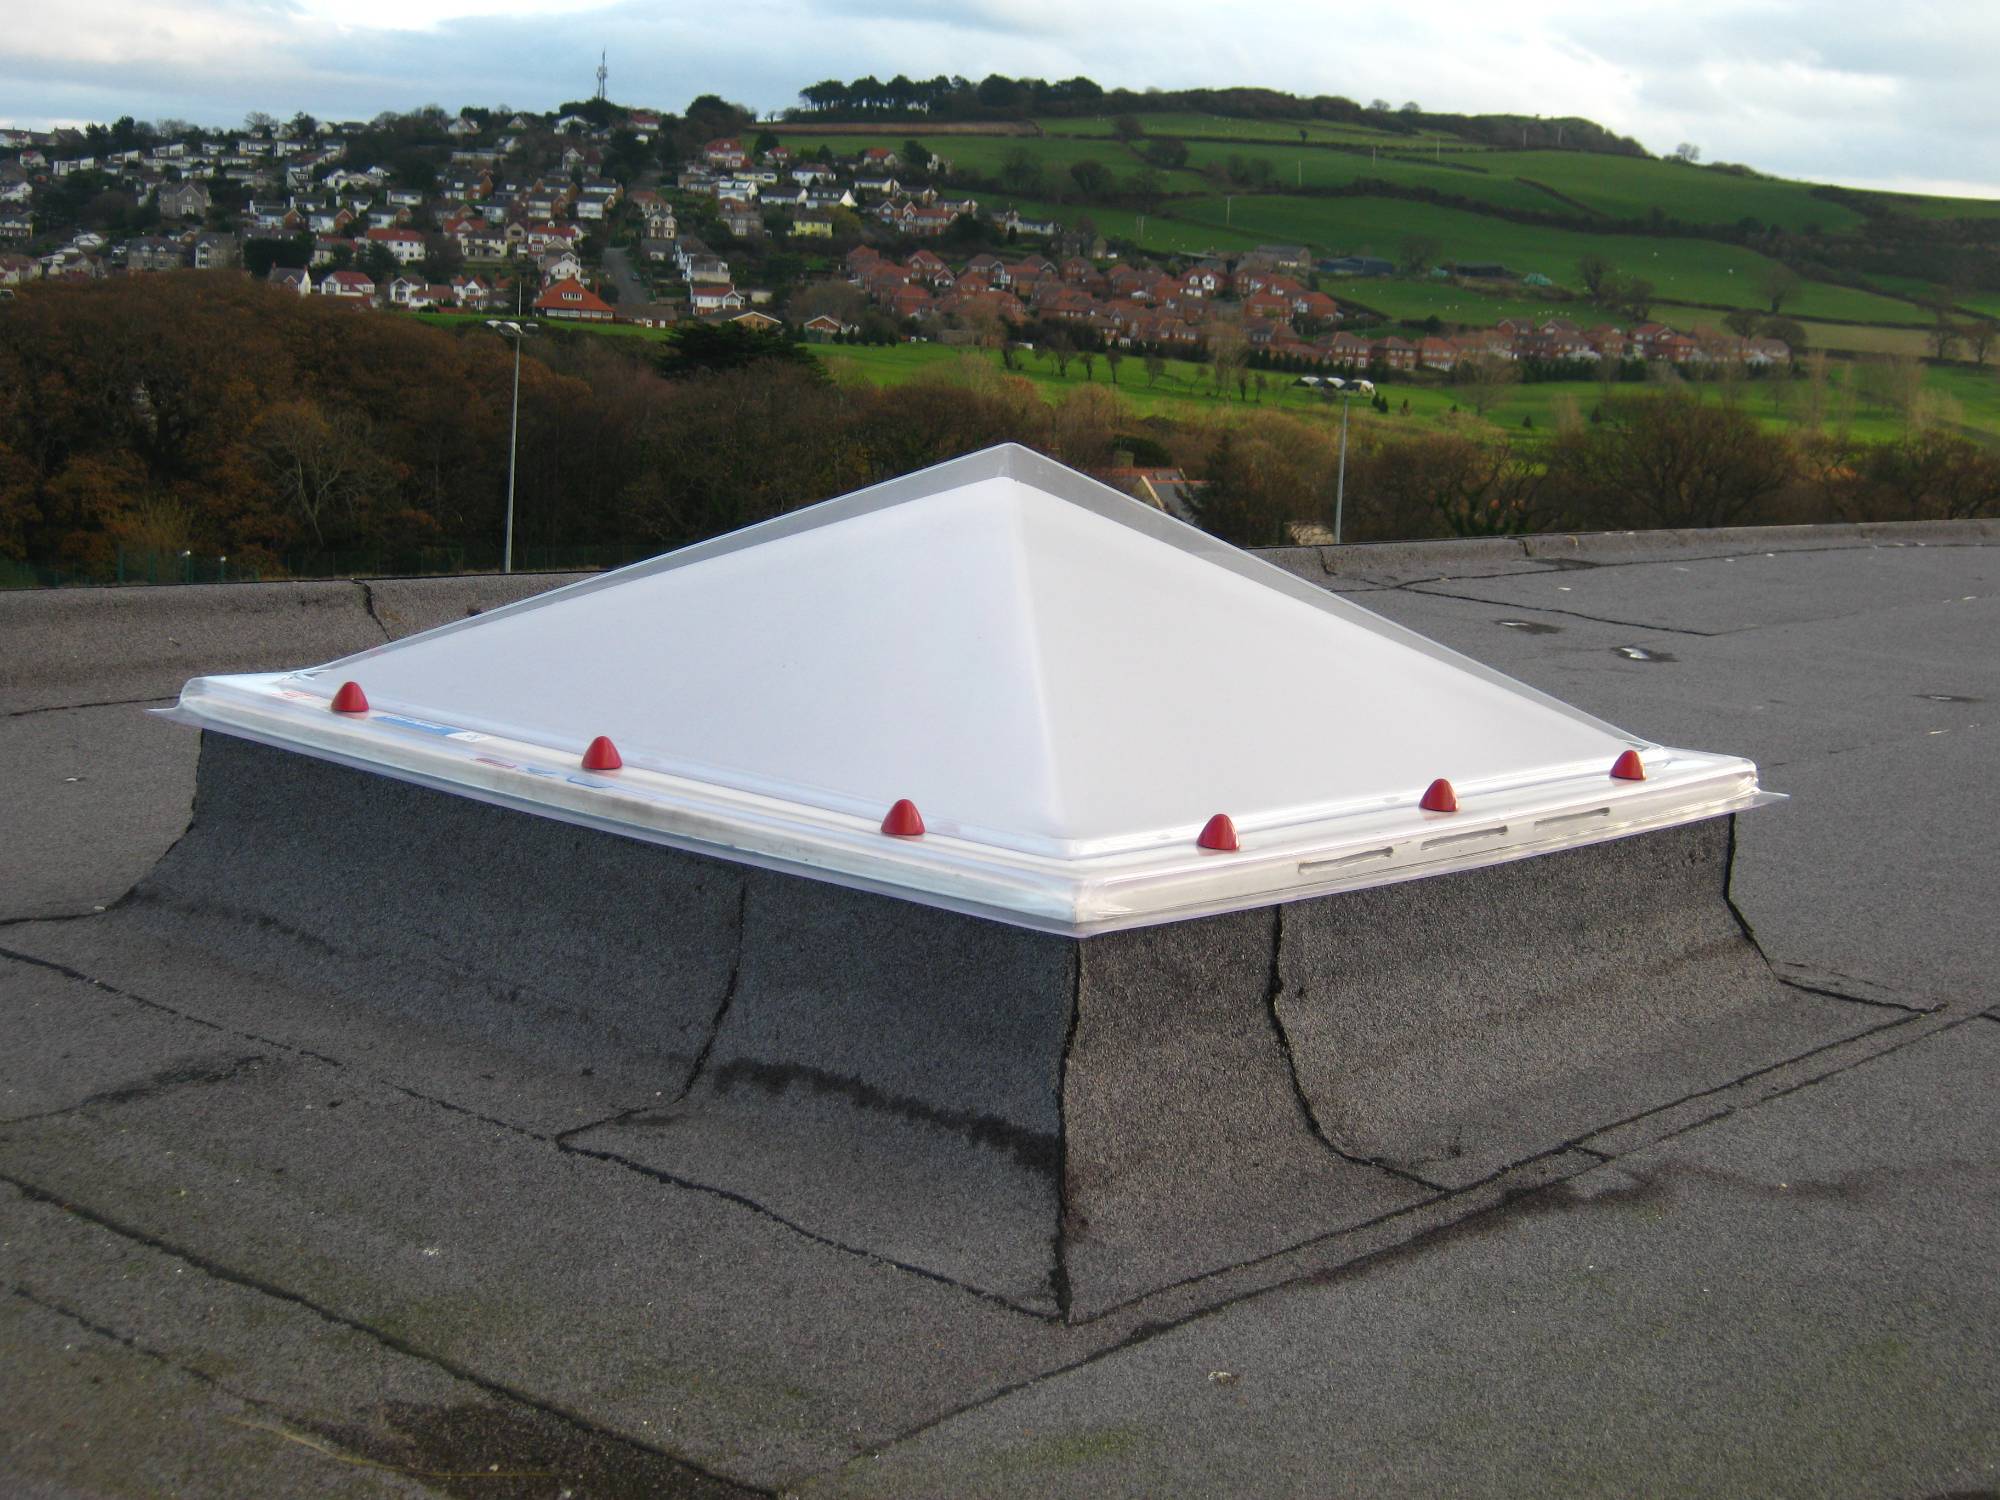 em.dome® Pyramid - Rooflight